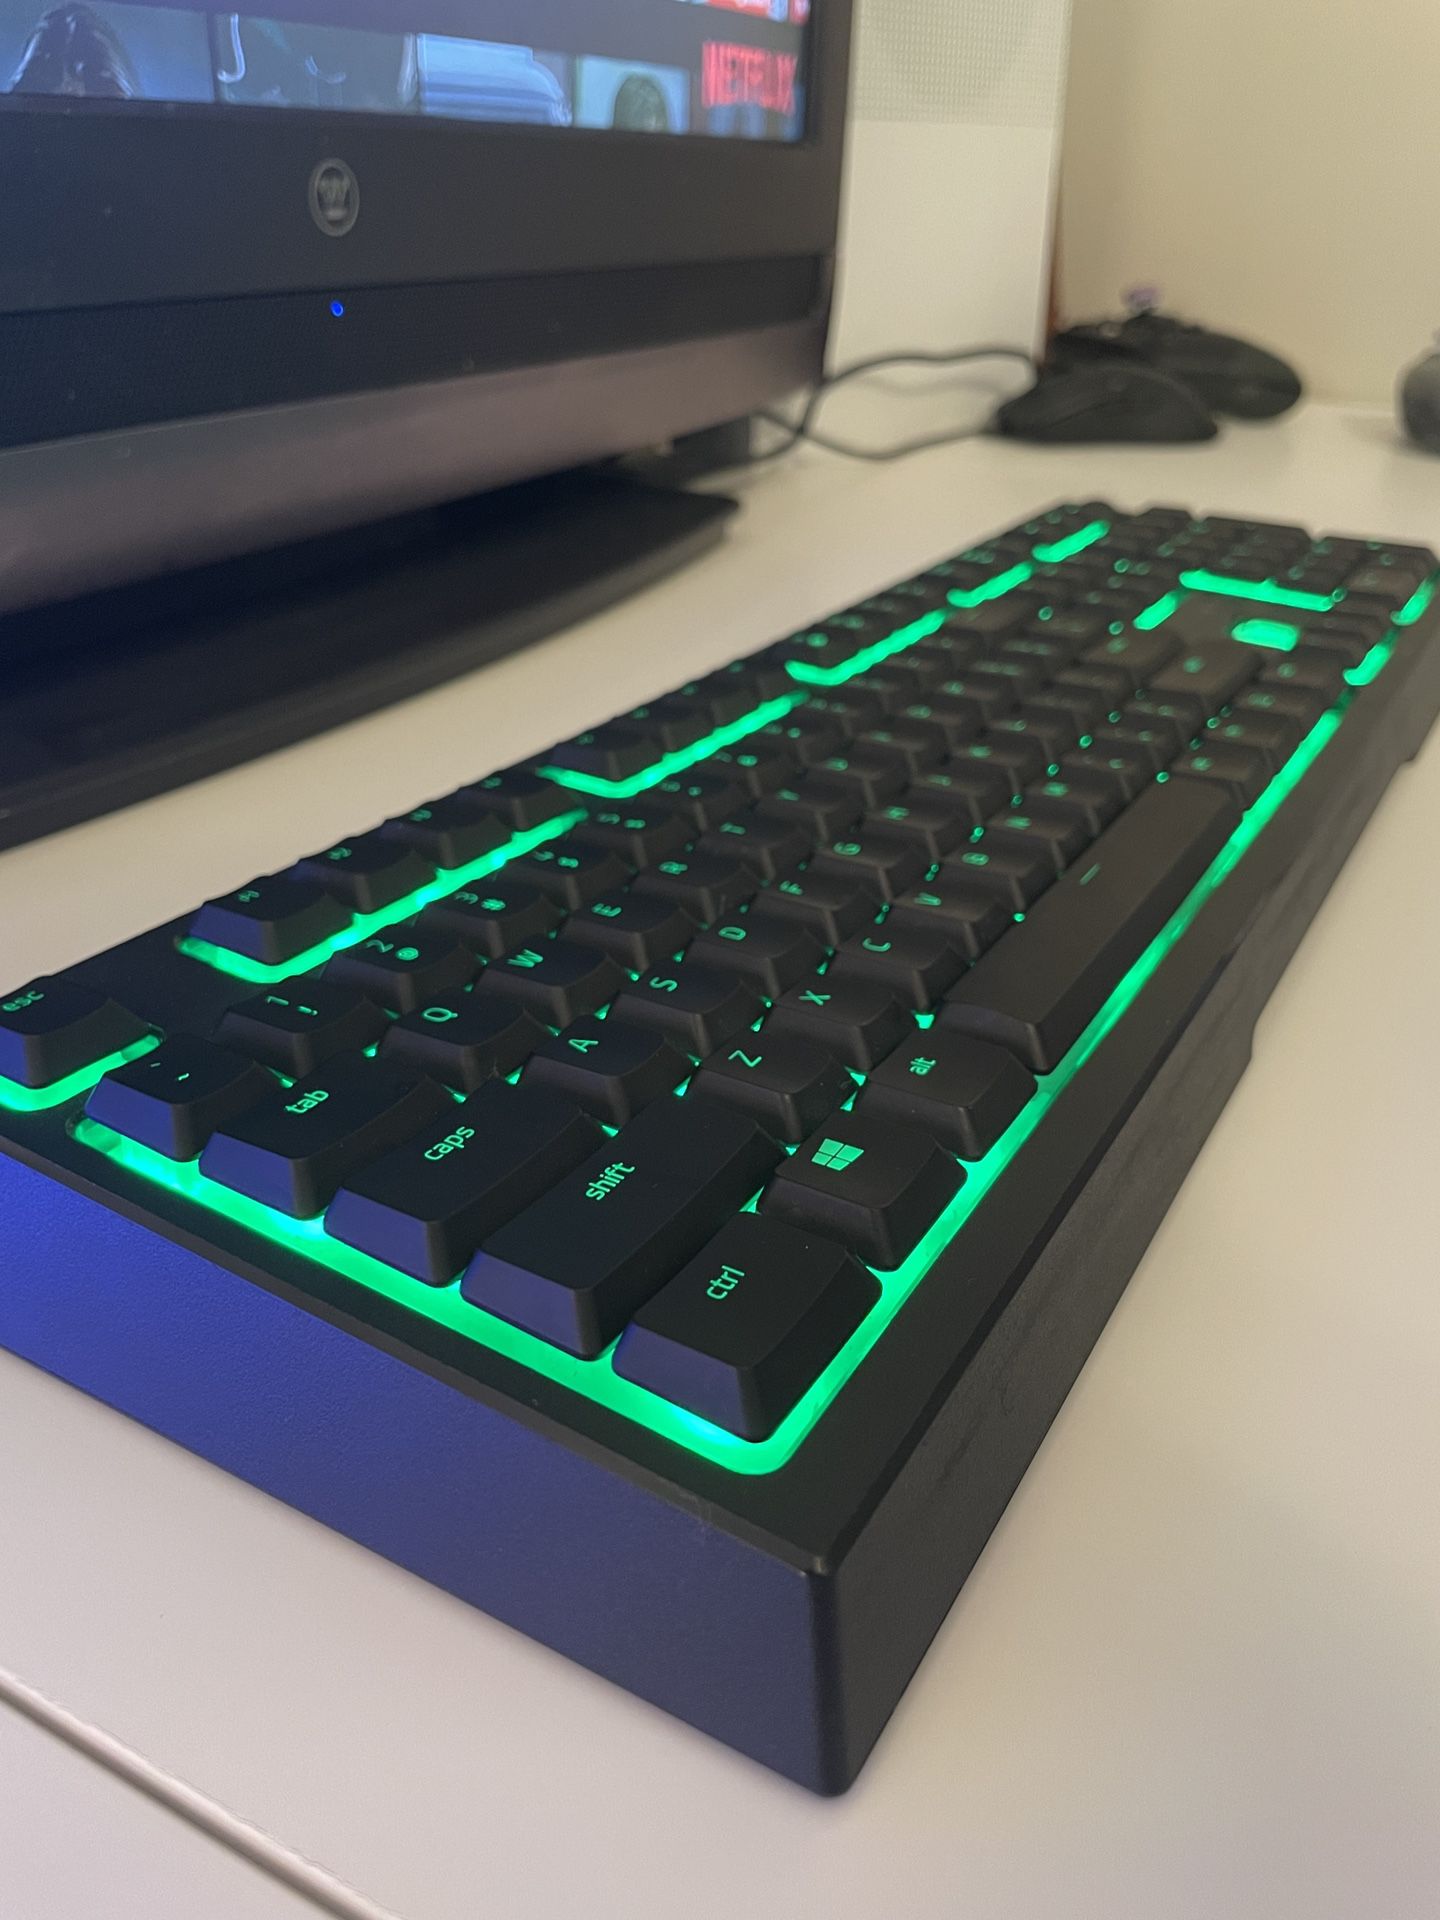 Razor Ornata Full Size Gaming Keyboard 